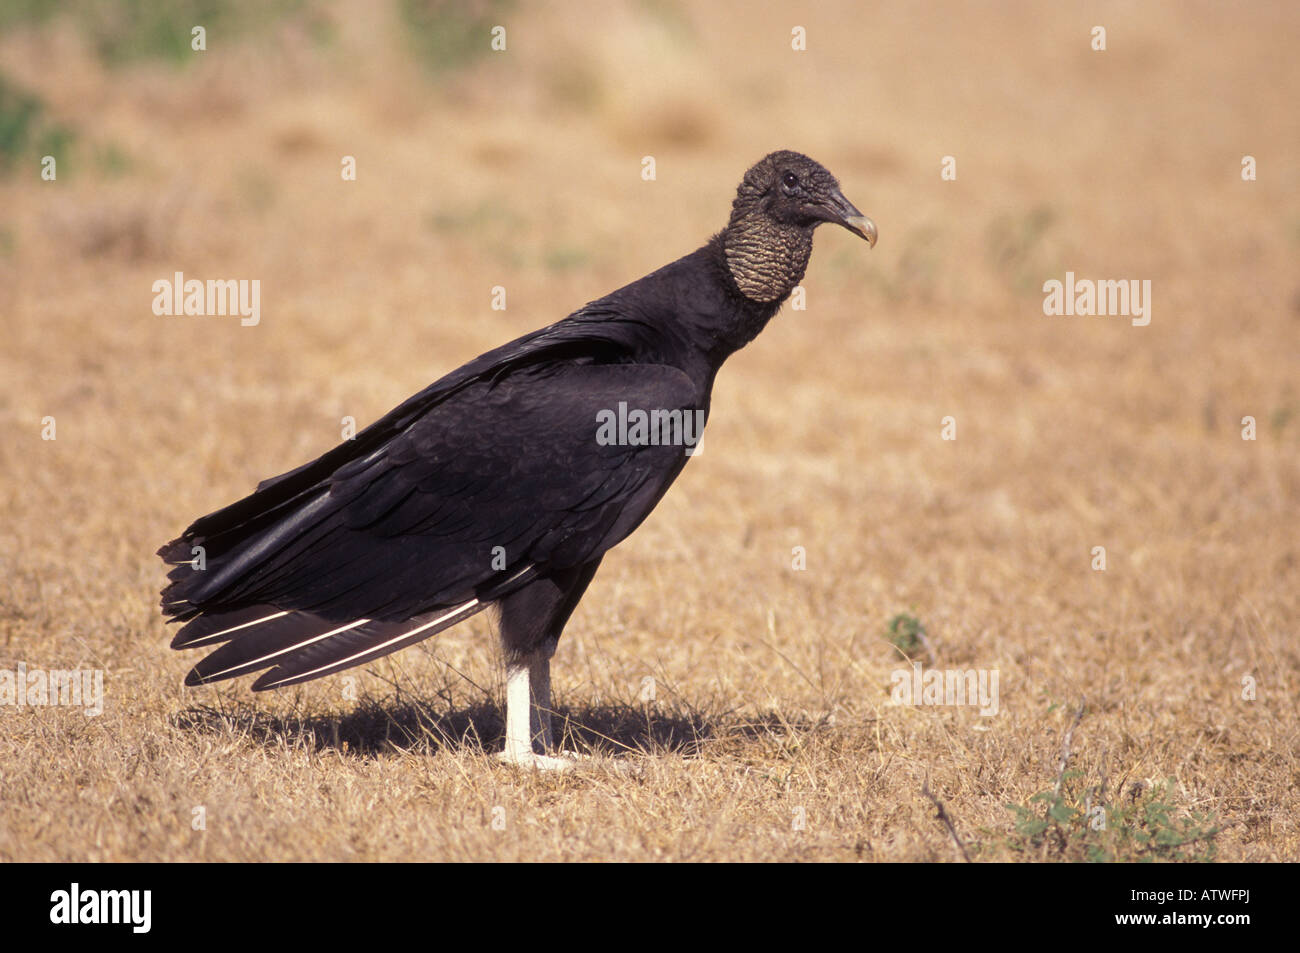 Black Vulture, Coragyps atratus, perched on ground. Stock Photo